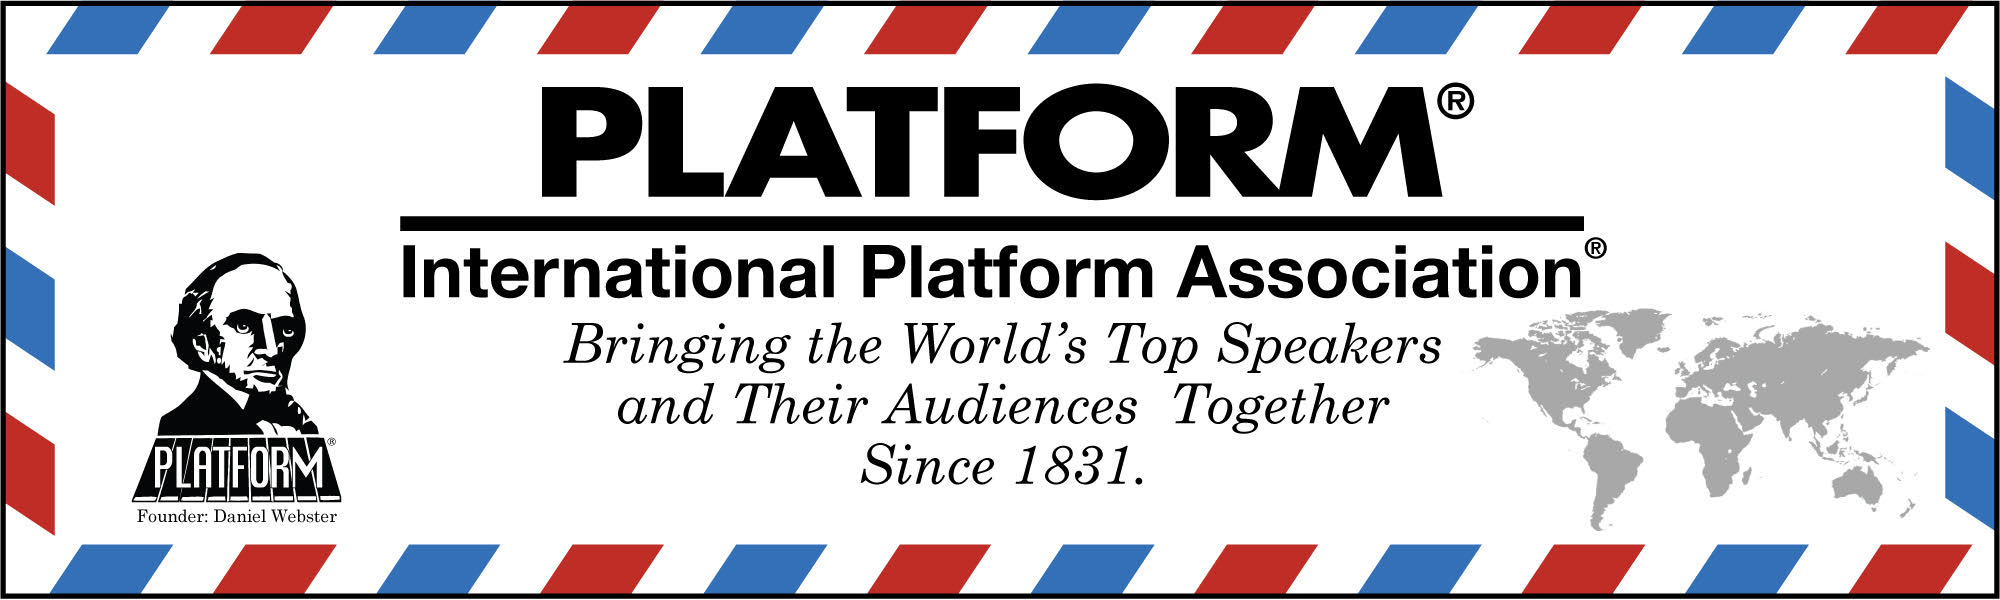 International Platform Association